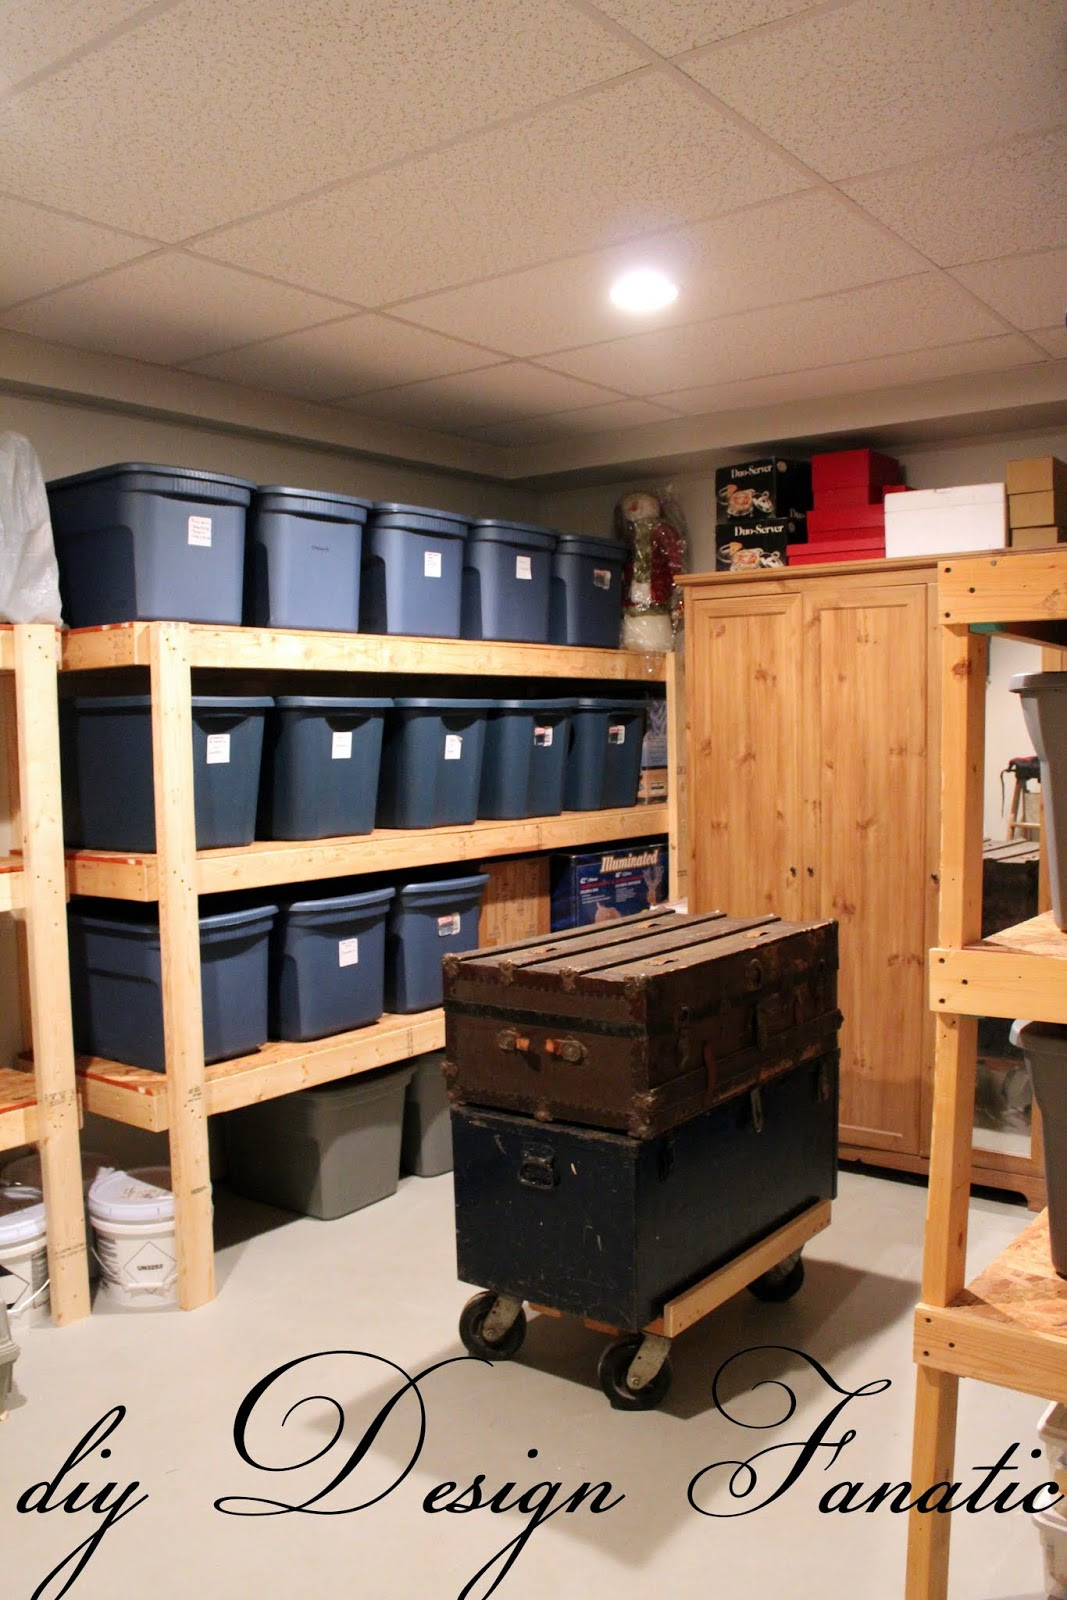 Best ideas about Diy Garage Storage
. Save or Pin storage shelves Now.